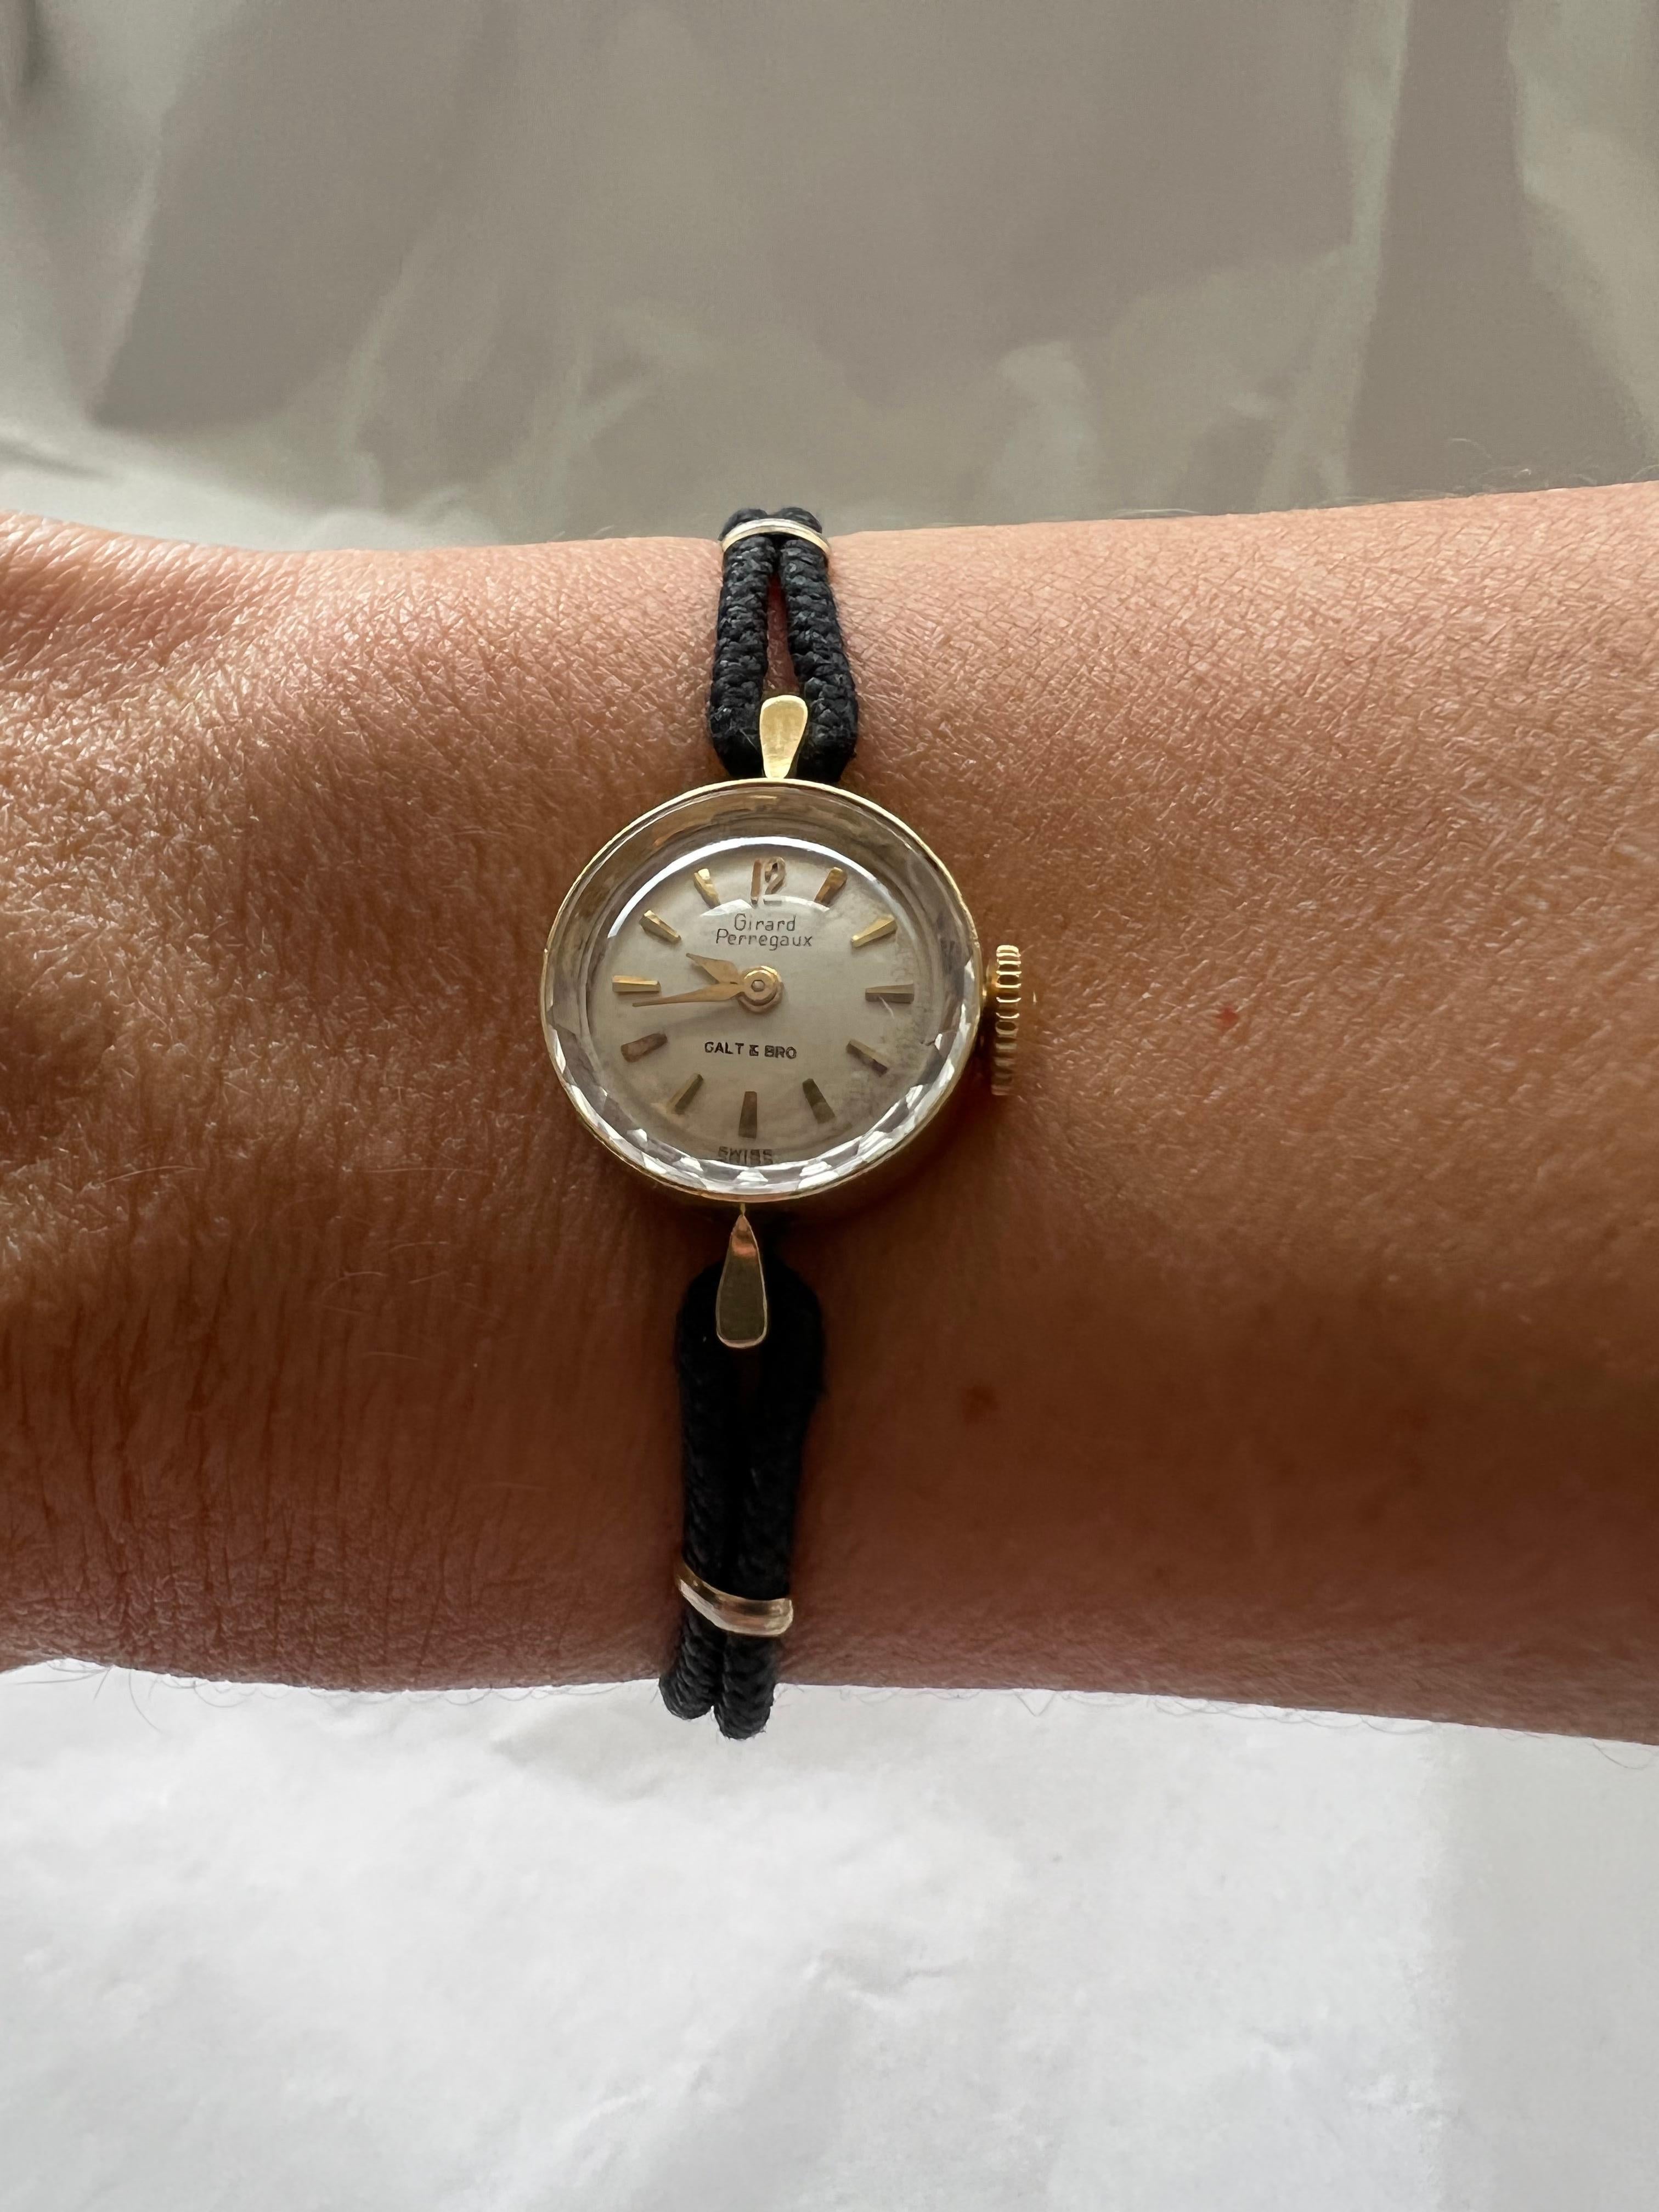 Antique Wristwatch Watch 14K Gold Case Galt Vintage Estate Item Find

Around 0.50 oz in weight 

Sold as pictured - will need repairs to work